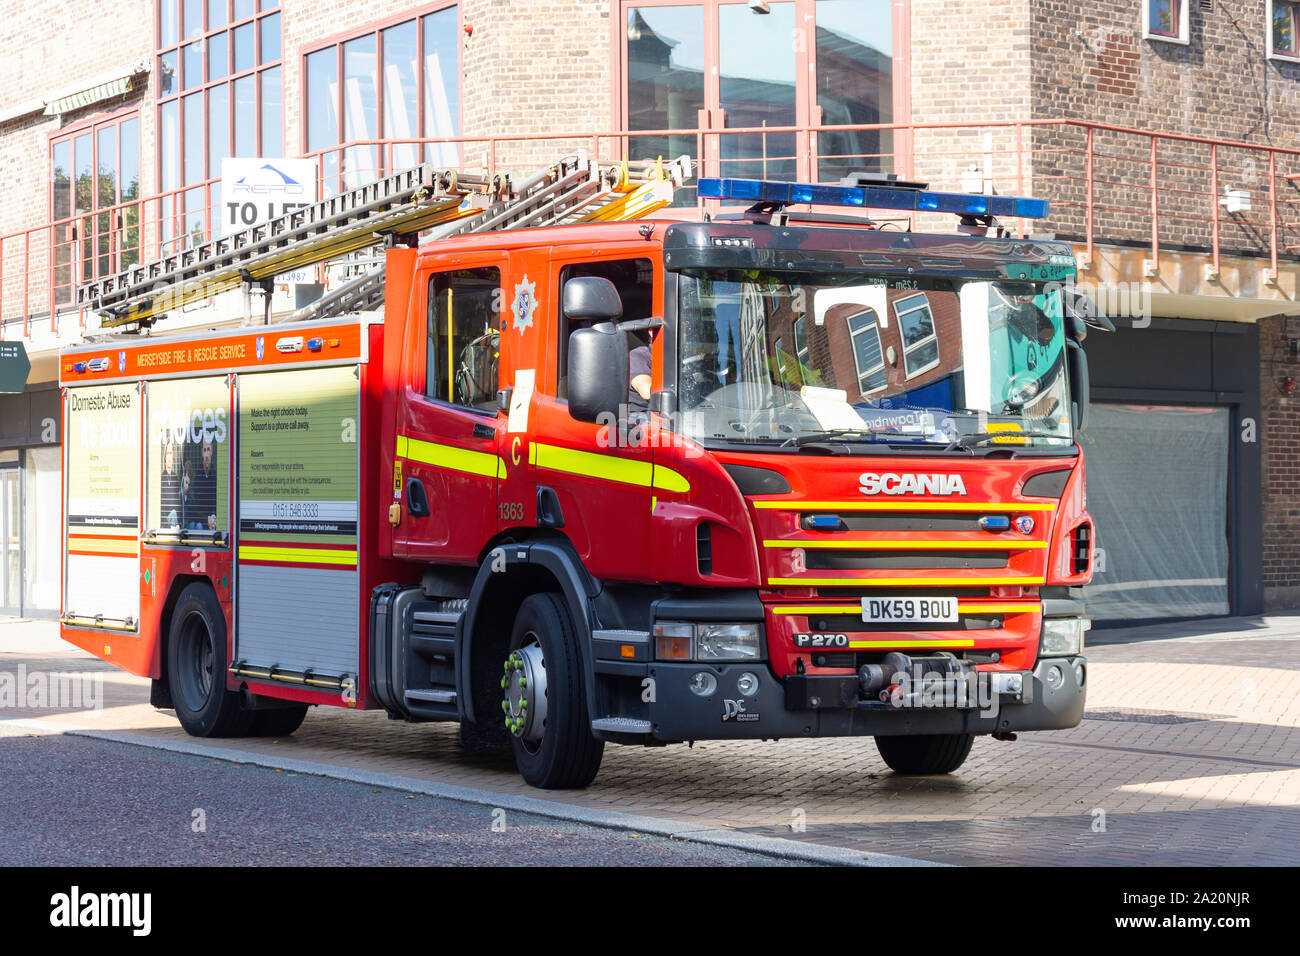 Merseyside Fire engine on call, Ormskirk Street, St Helens, Merseyside, England, United Kingdom Stock Photo